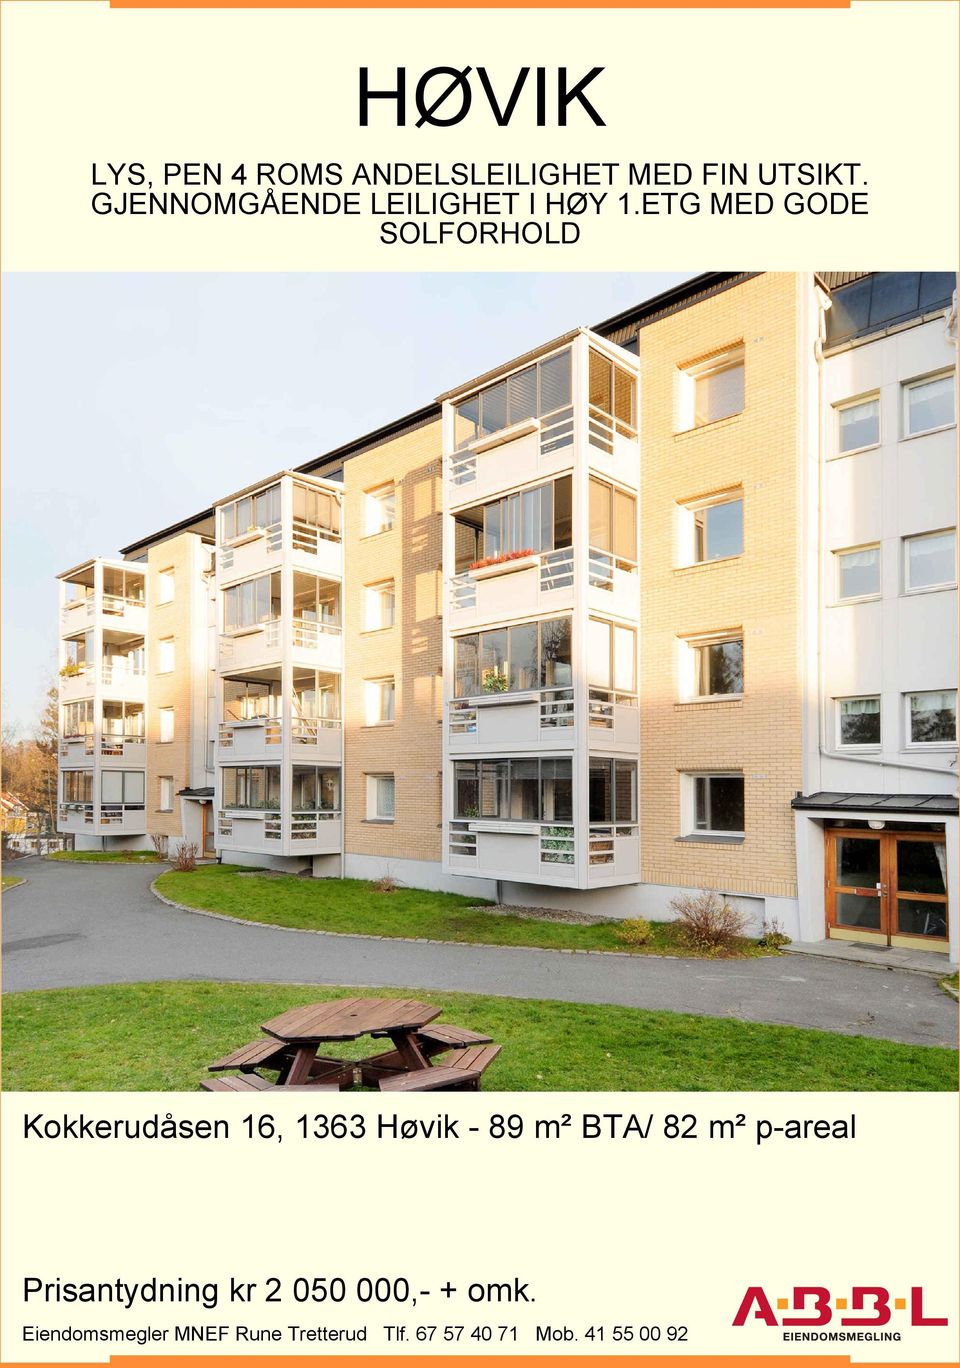 ETG MED GODE SOLFORHOLD Kokkerudåsen 16, 1363 Høvik - 89 m² BTA/ 82